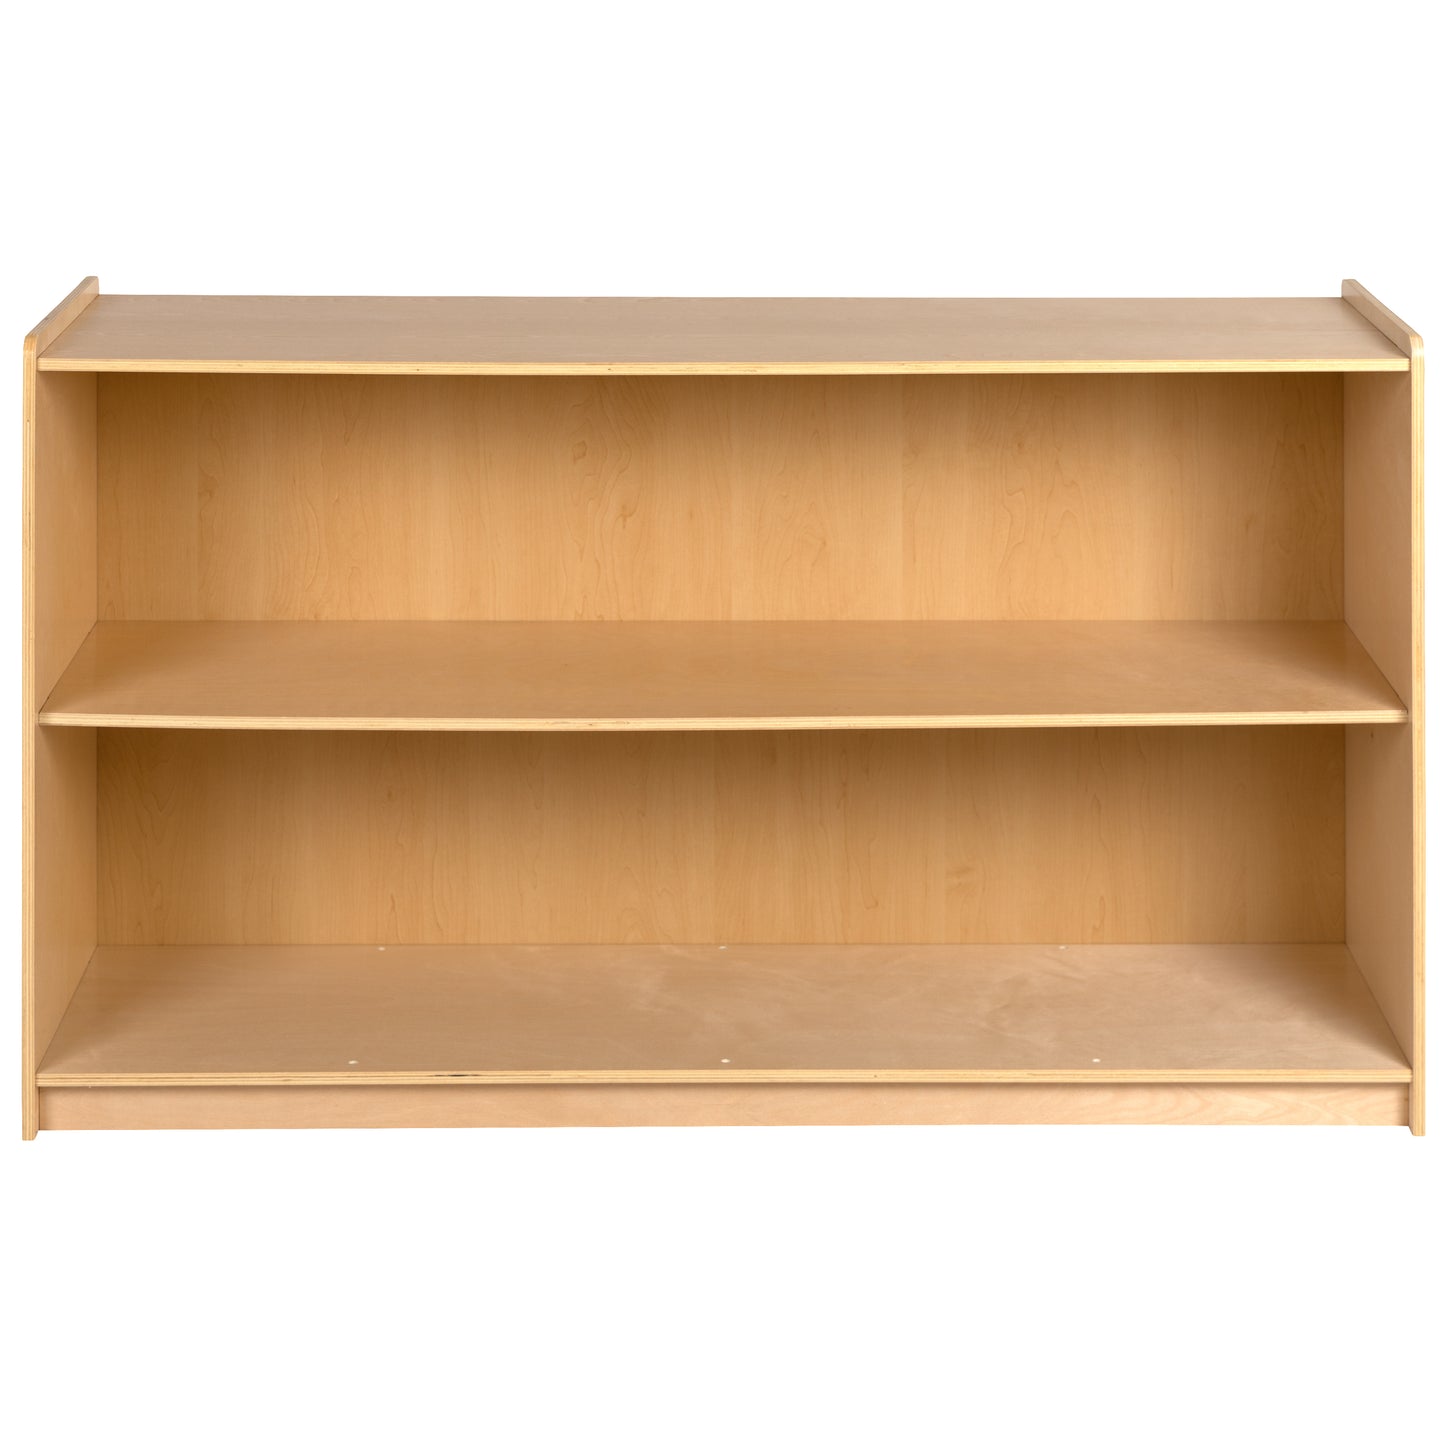 Wood Classroom Storage Cabinet MK-STRG007-GG